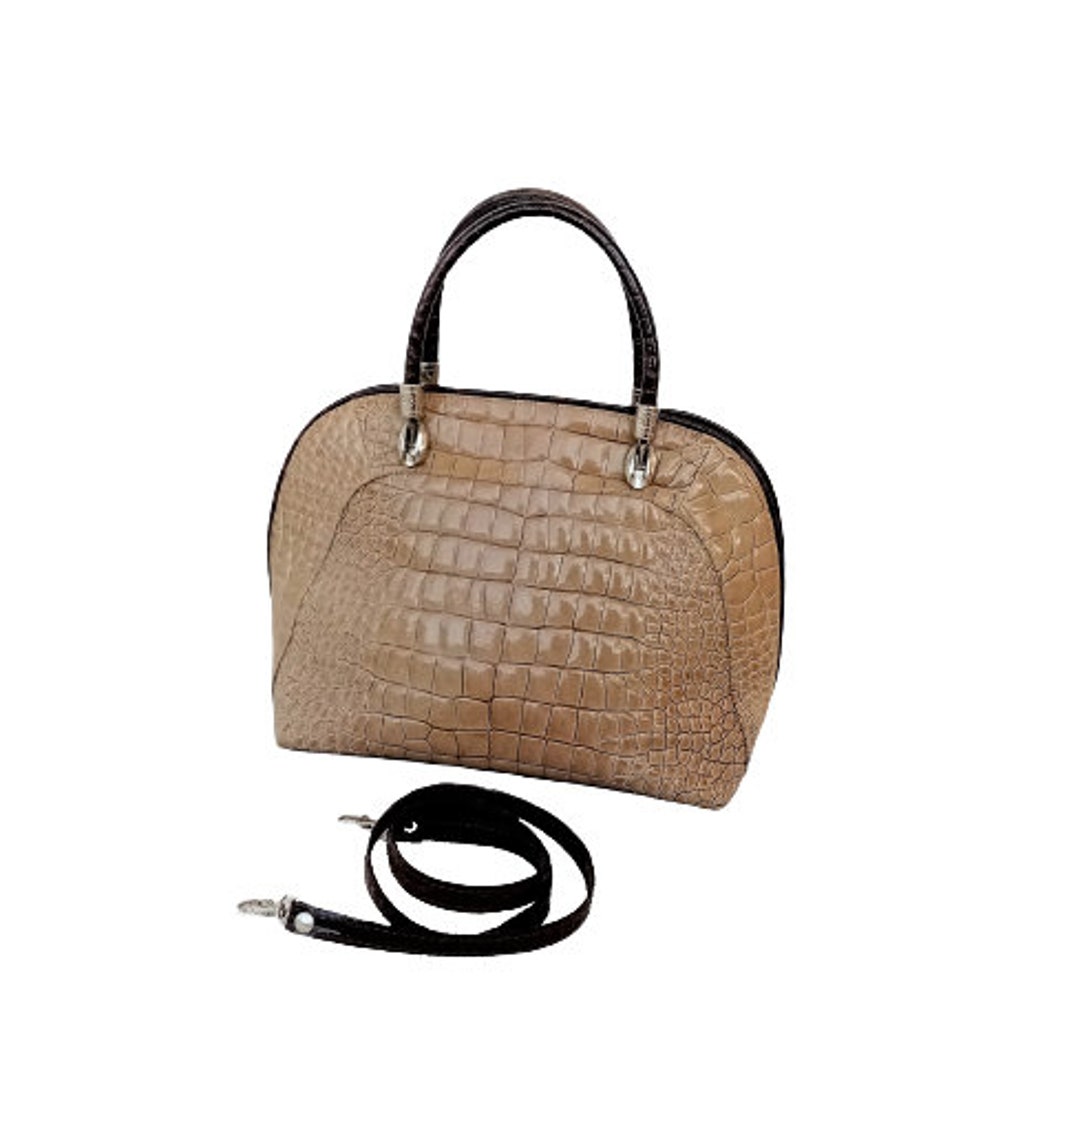 Borse in Pelle Bag Genuine Leather Handbag Croc Embossed - Etsy